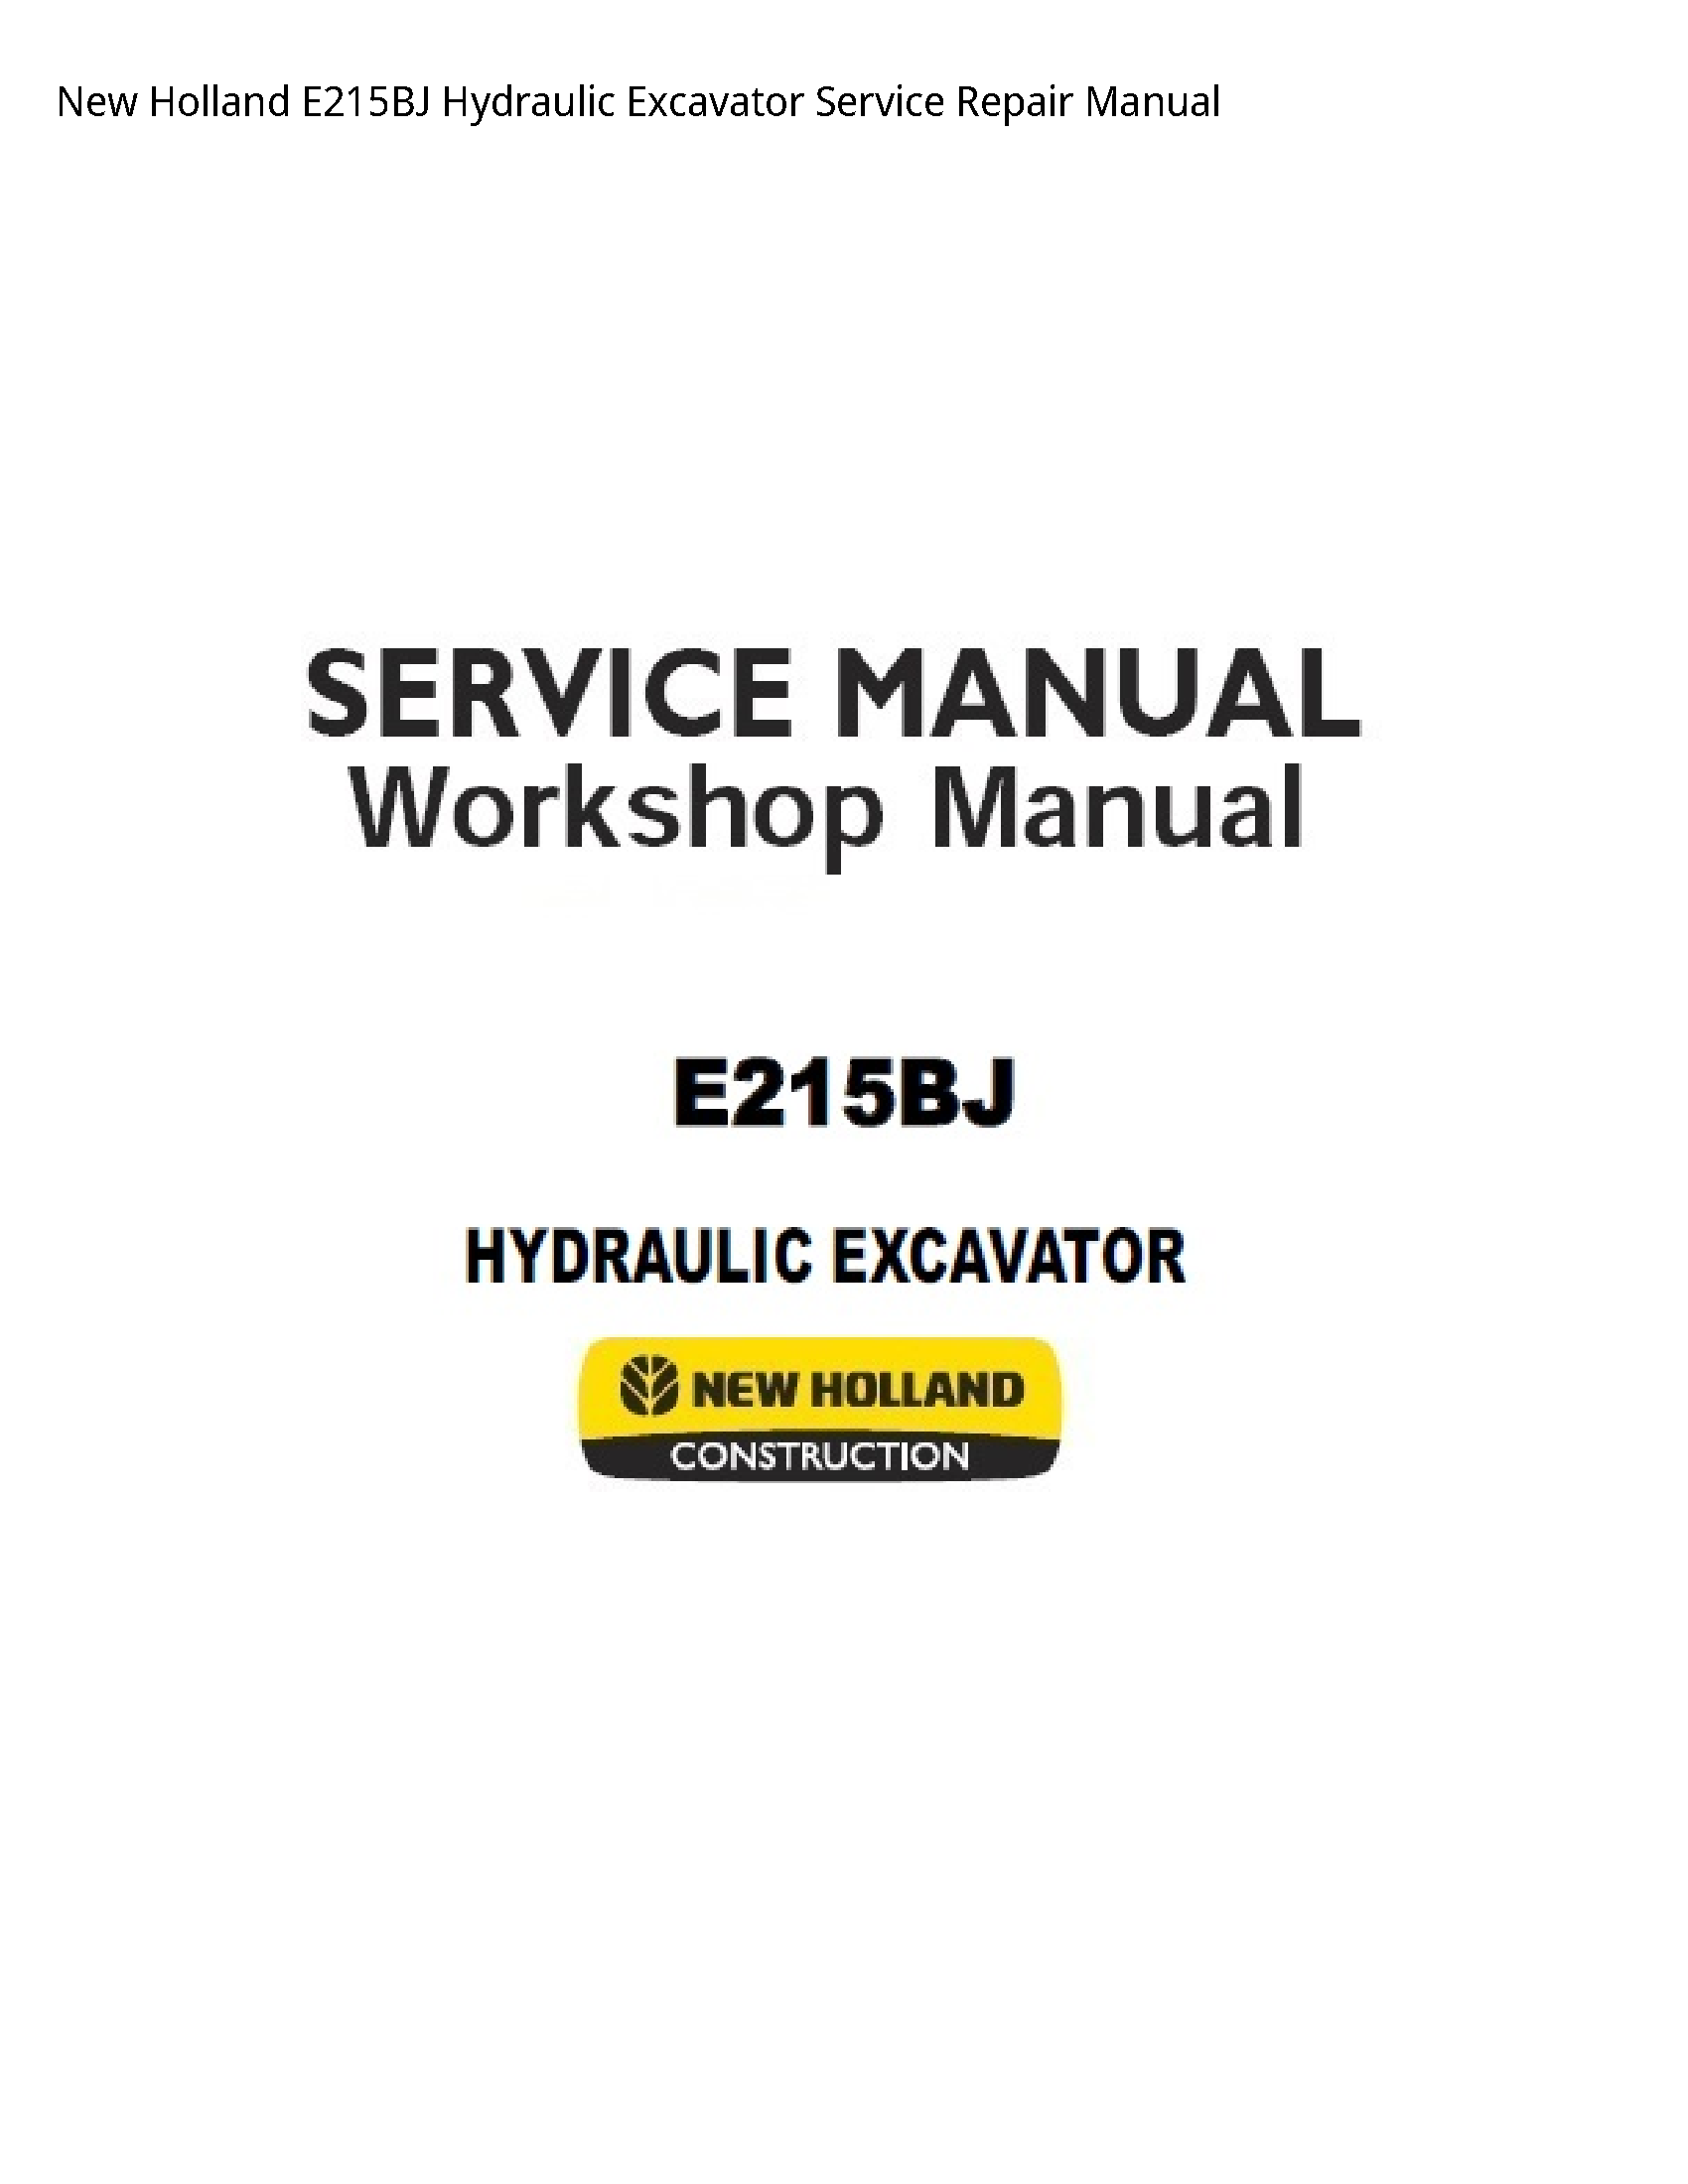 New Holland E215BJ Hydraulic Excavator manual